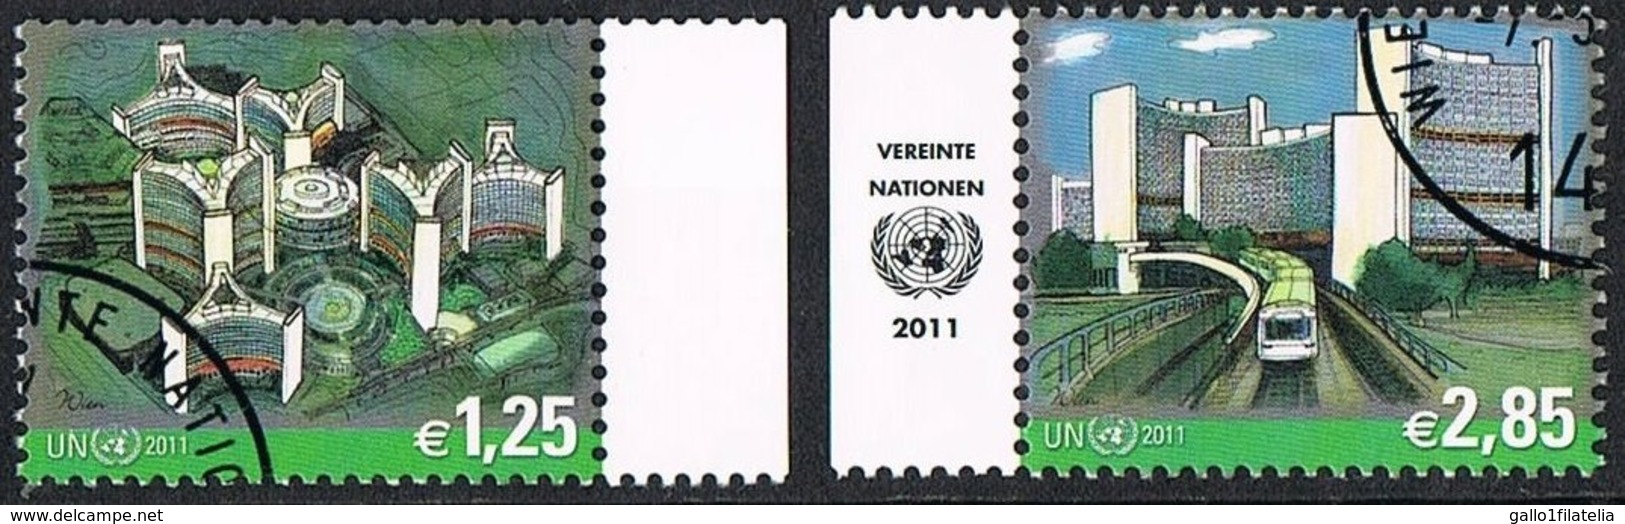 2011 - O.N.U. / UNITED NATIONS - VIENNA / WIEN - POSTA ORDINARIA / DEFINITIVE. USATO - Gebraucht